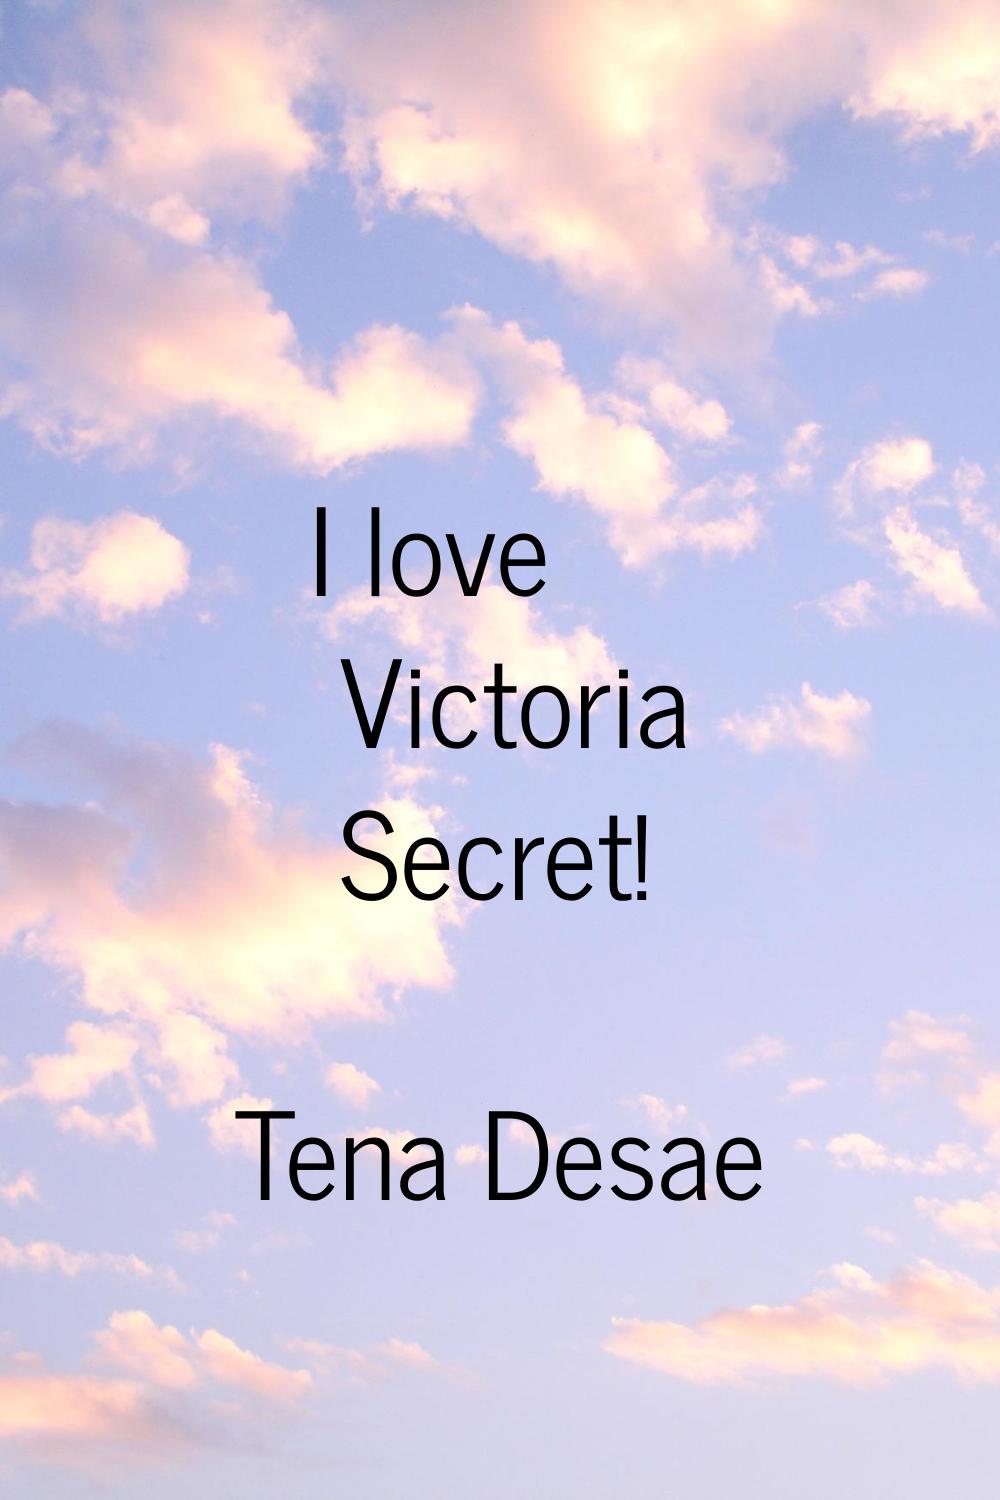 I love Victoria Secret!